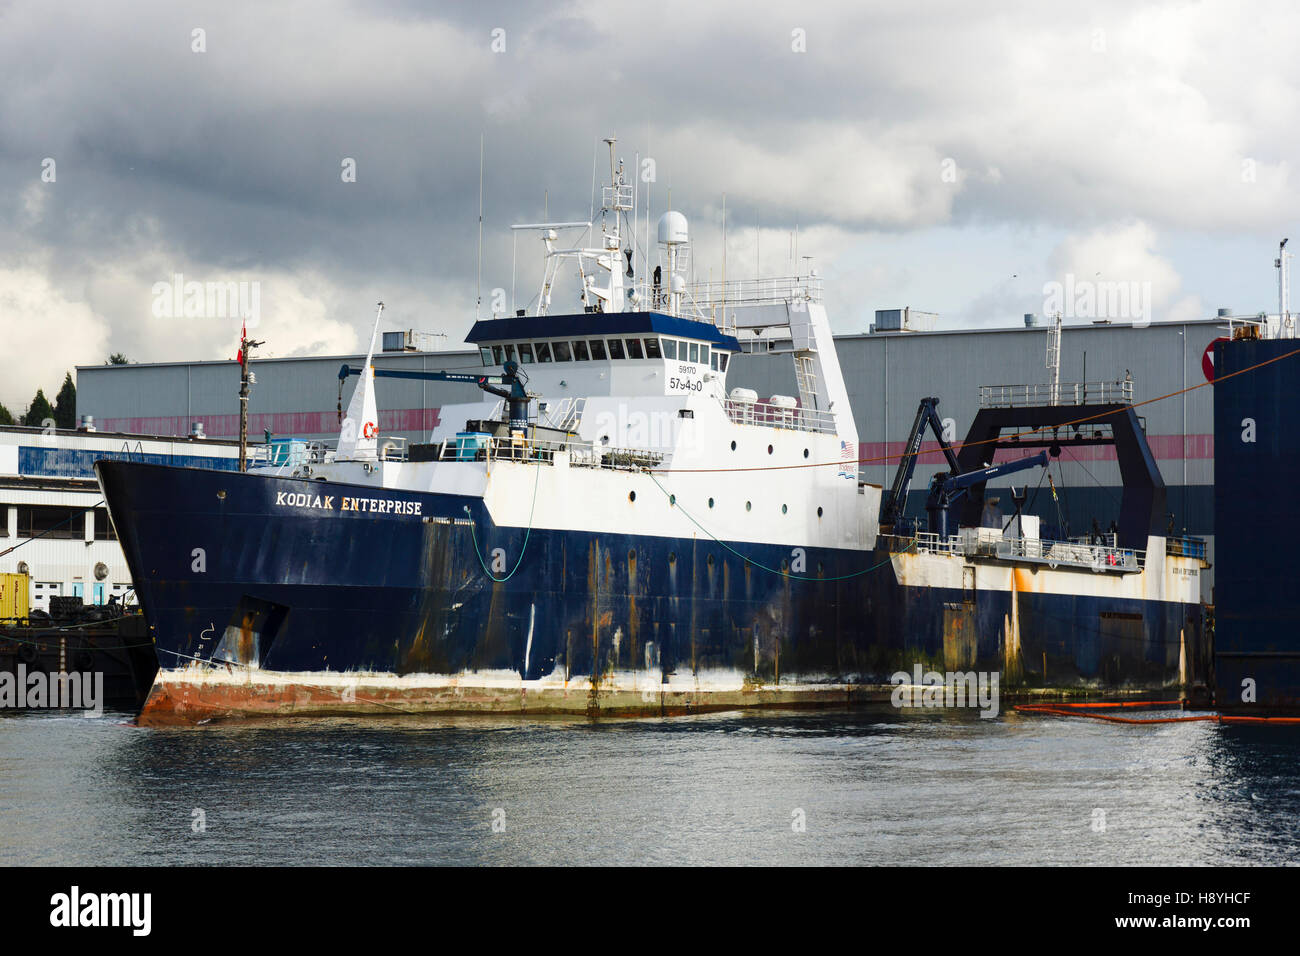 Fishing trawler 'Kodiak Enterprise' at Seaspan shipyards in North Vancouver, BC, Canada. Stock Photo